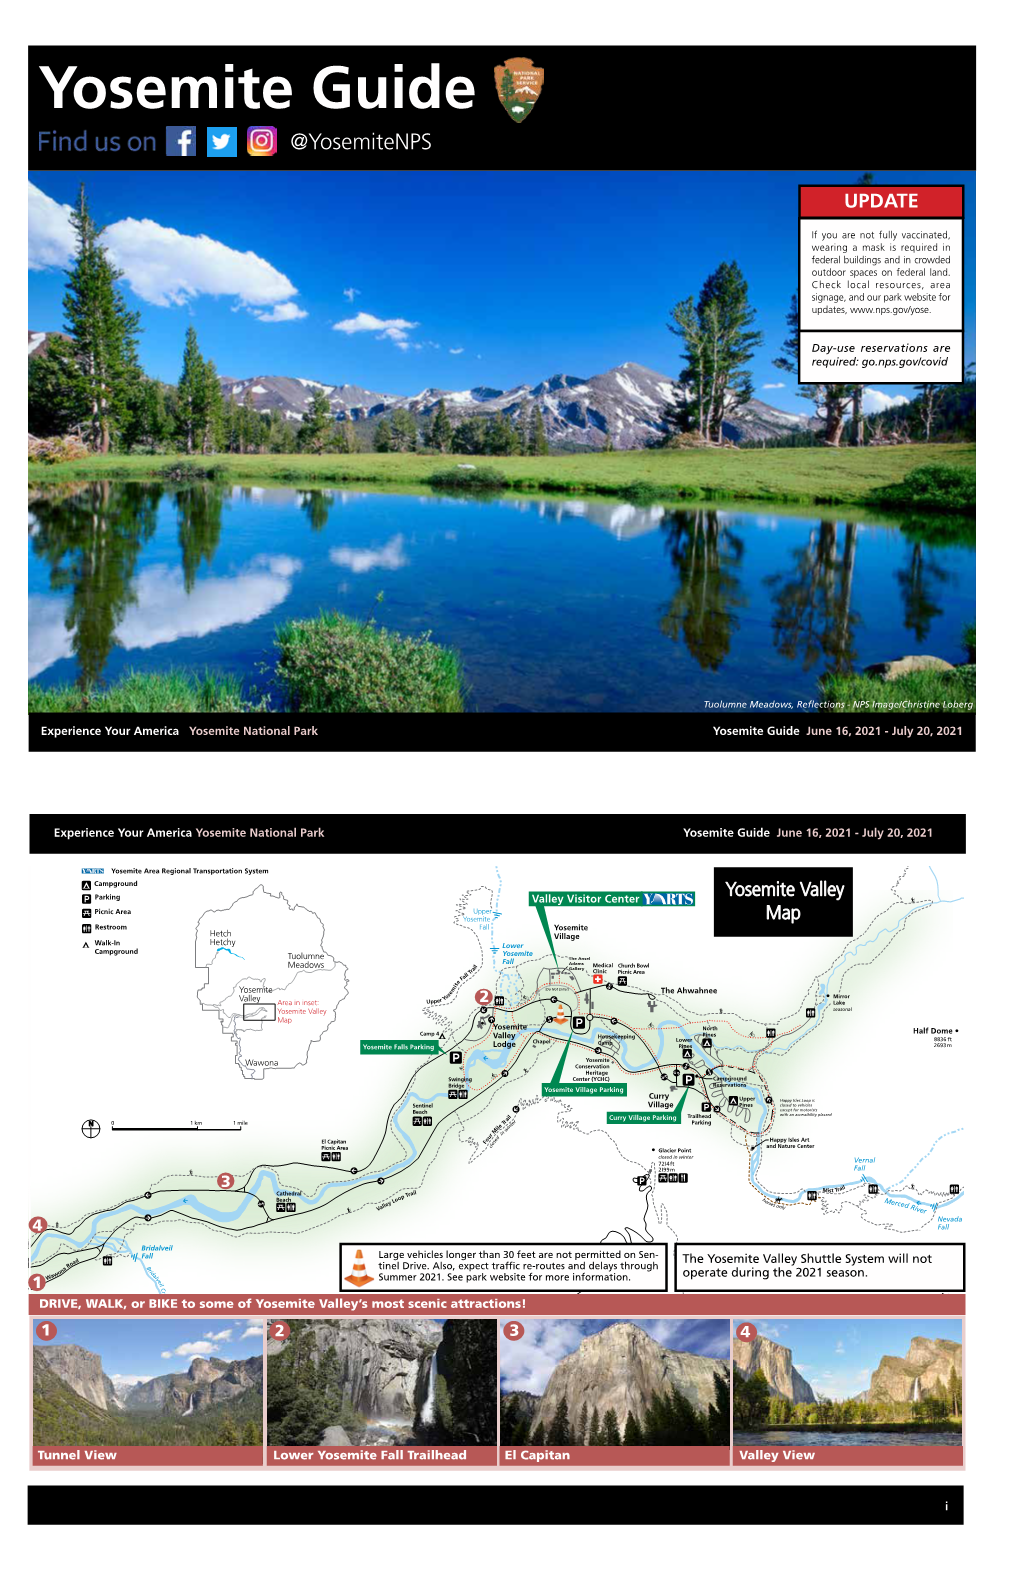 Yosemite Guide Yosemite Guide June 16, 2021 - July 20, 2021 @Yosemitenps